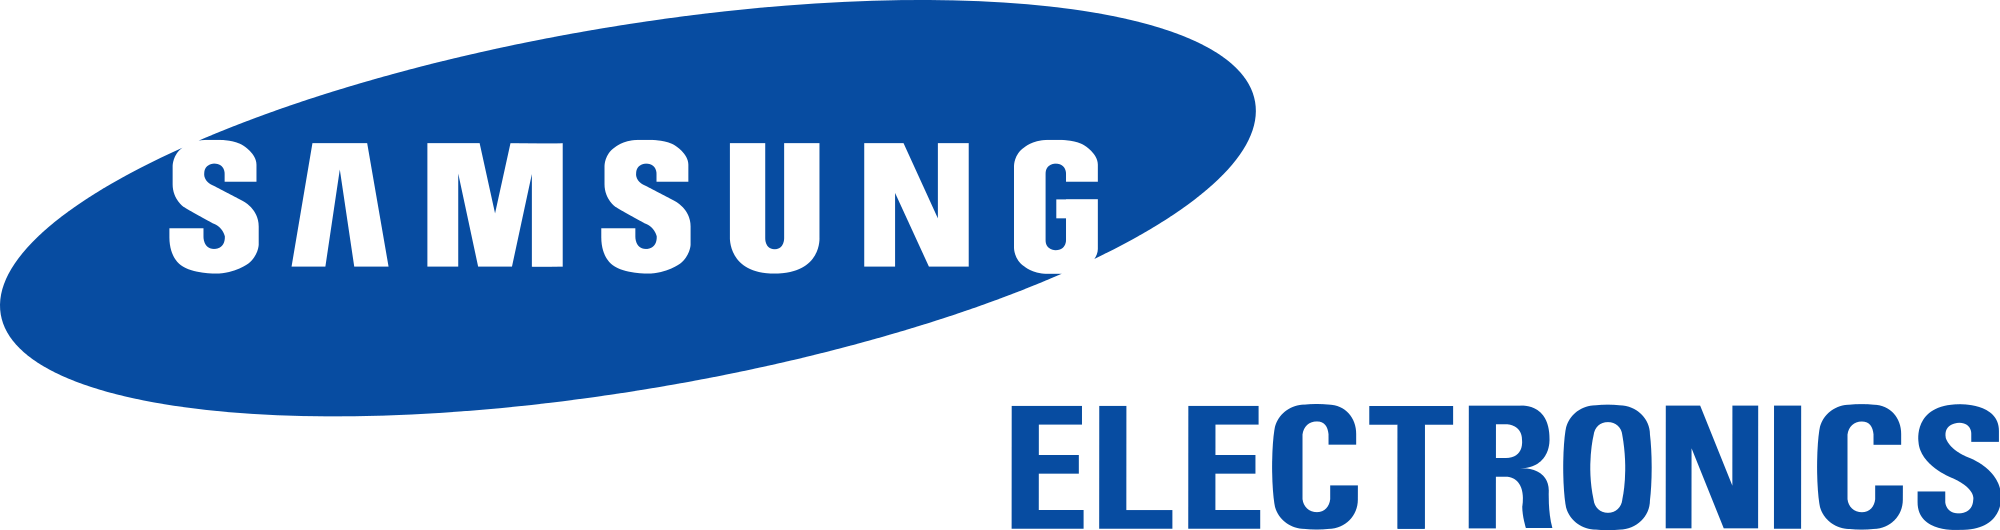 Samsung Company Logo - File:Samsung Electronics logo (english).svg - Wikimedia Commons